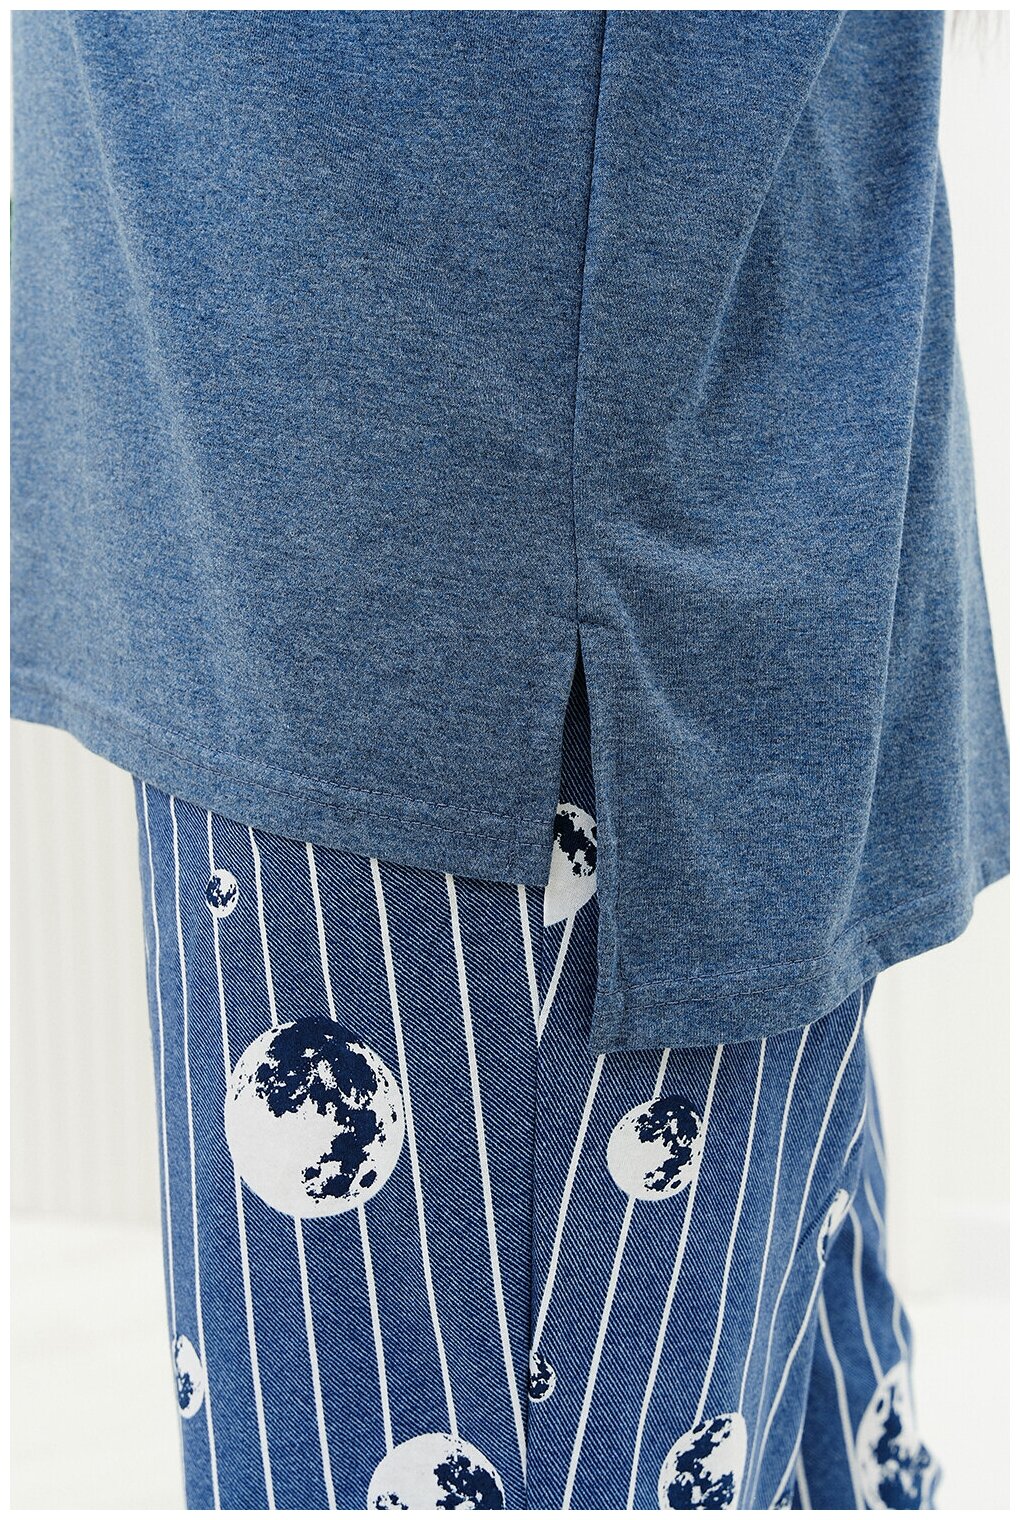 Комплект Натали, туника, футболка, брюки, короткий рукав, пояс на резинке, трикотажная, карманы, размер 50, синий - фотография № 9